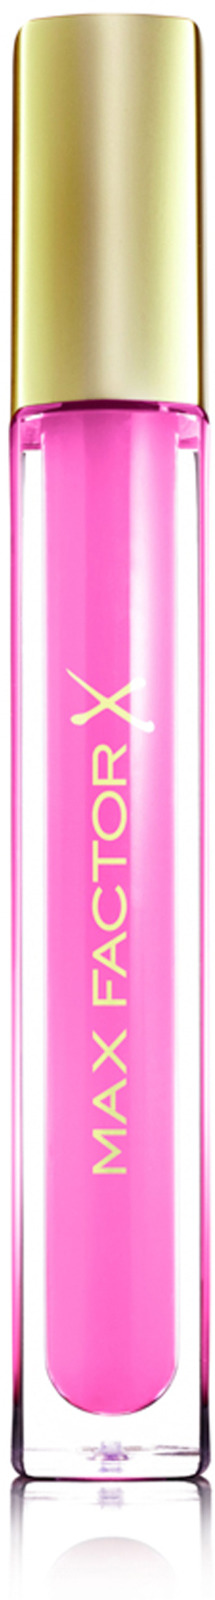 Max Factor Блеск Для Губ Colour Elixir Gloss 35 тон lovely candy 3,4 мл